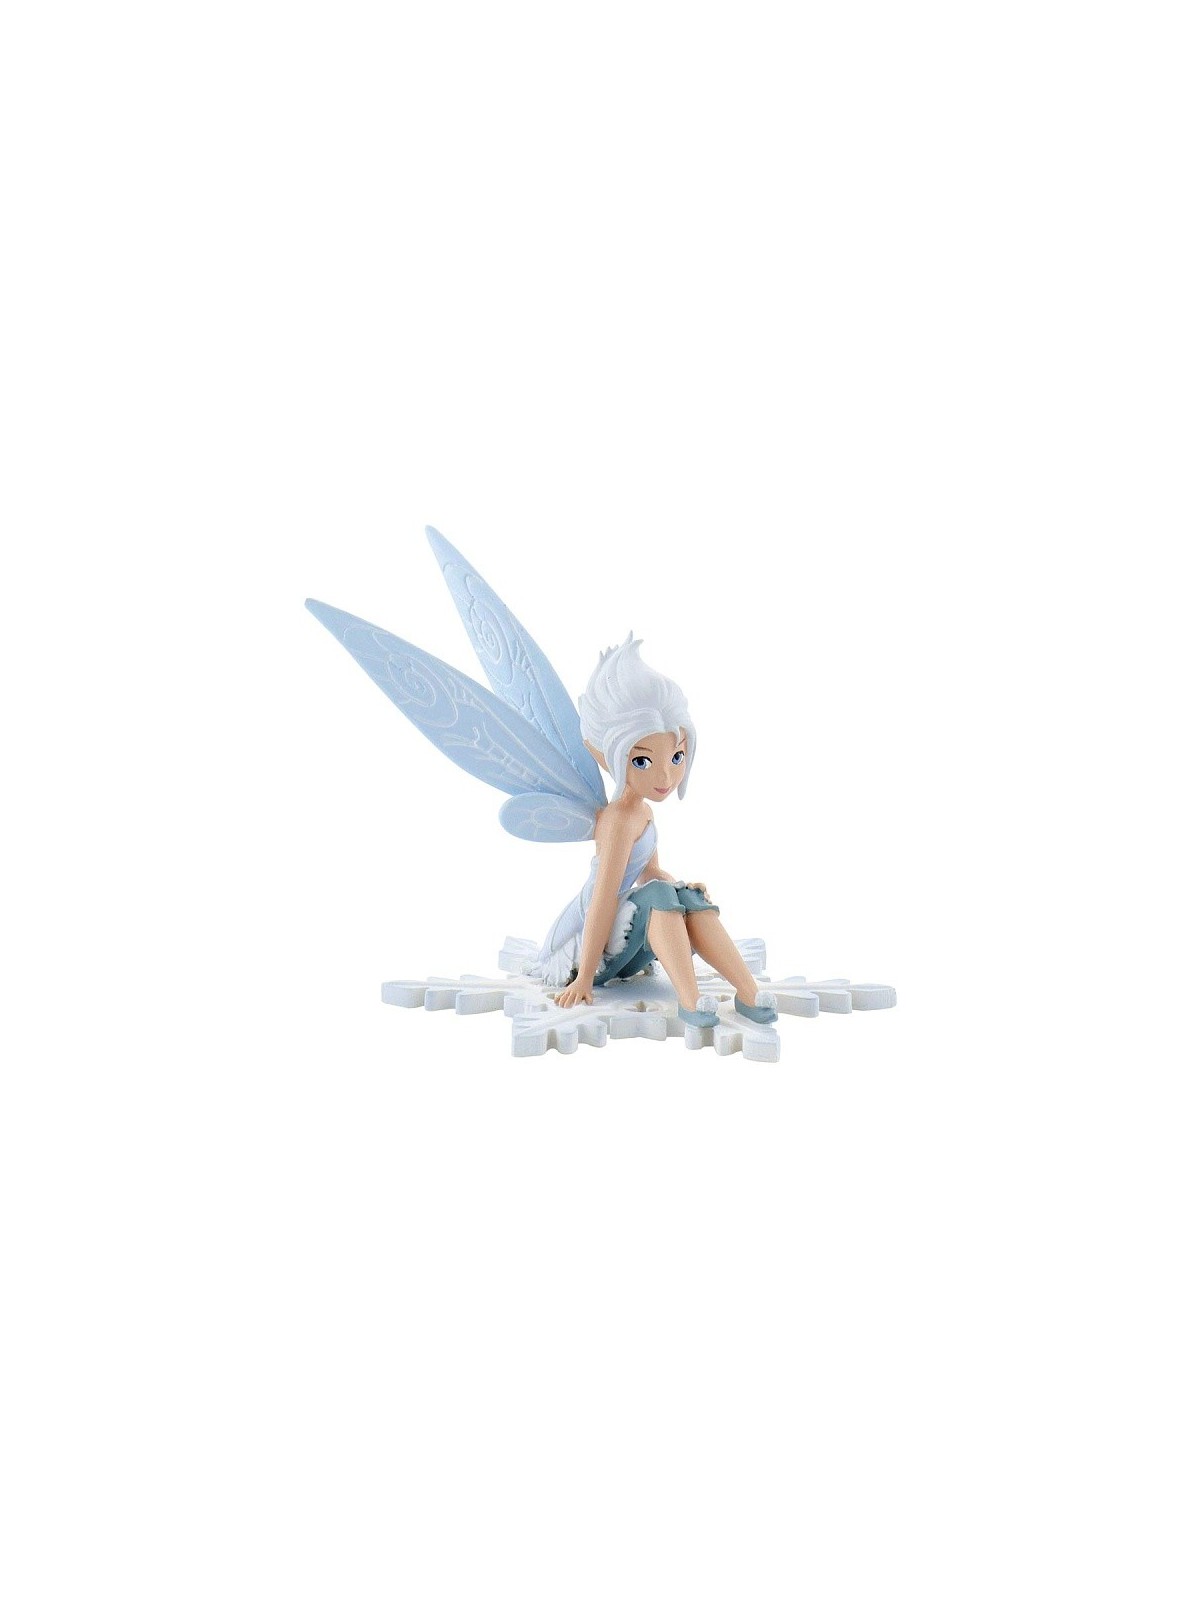 Dekorační figurka - Disney Figure - Modrovločka - Víla Zvonilka